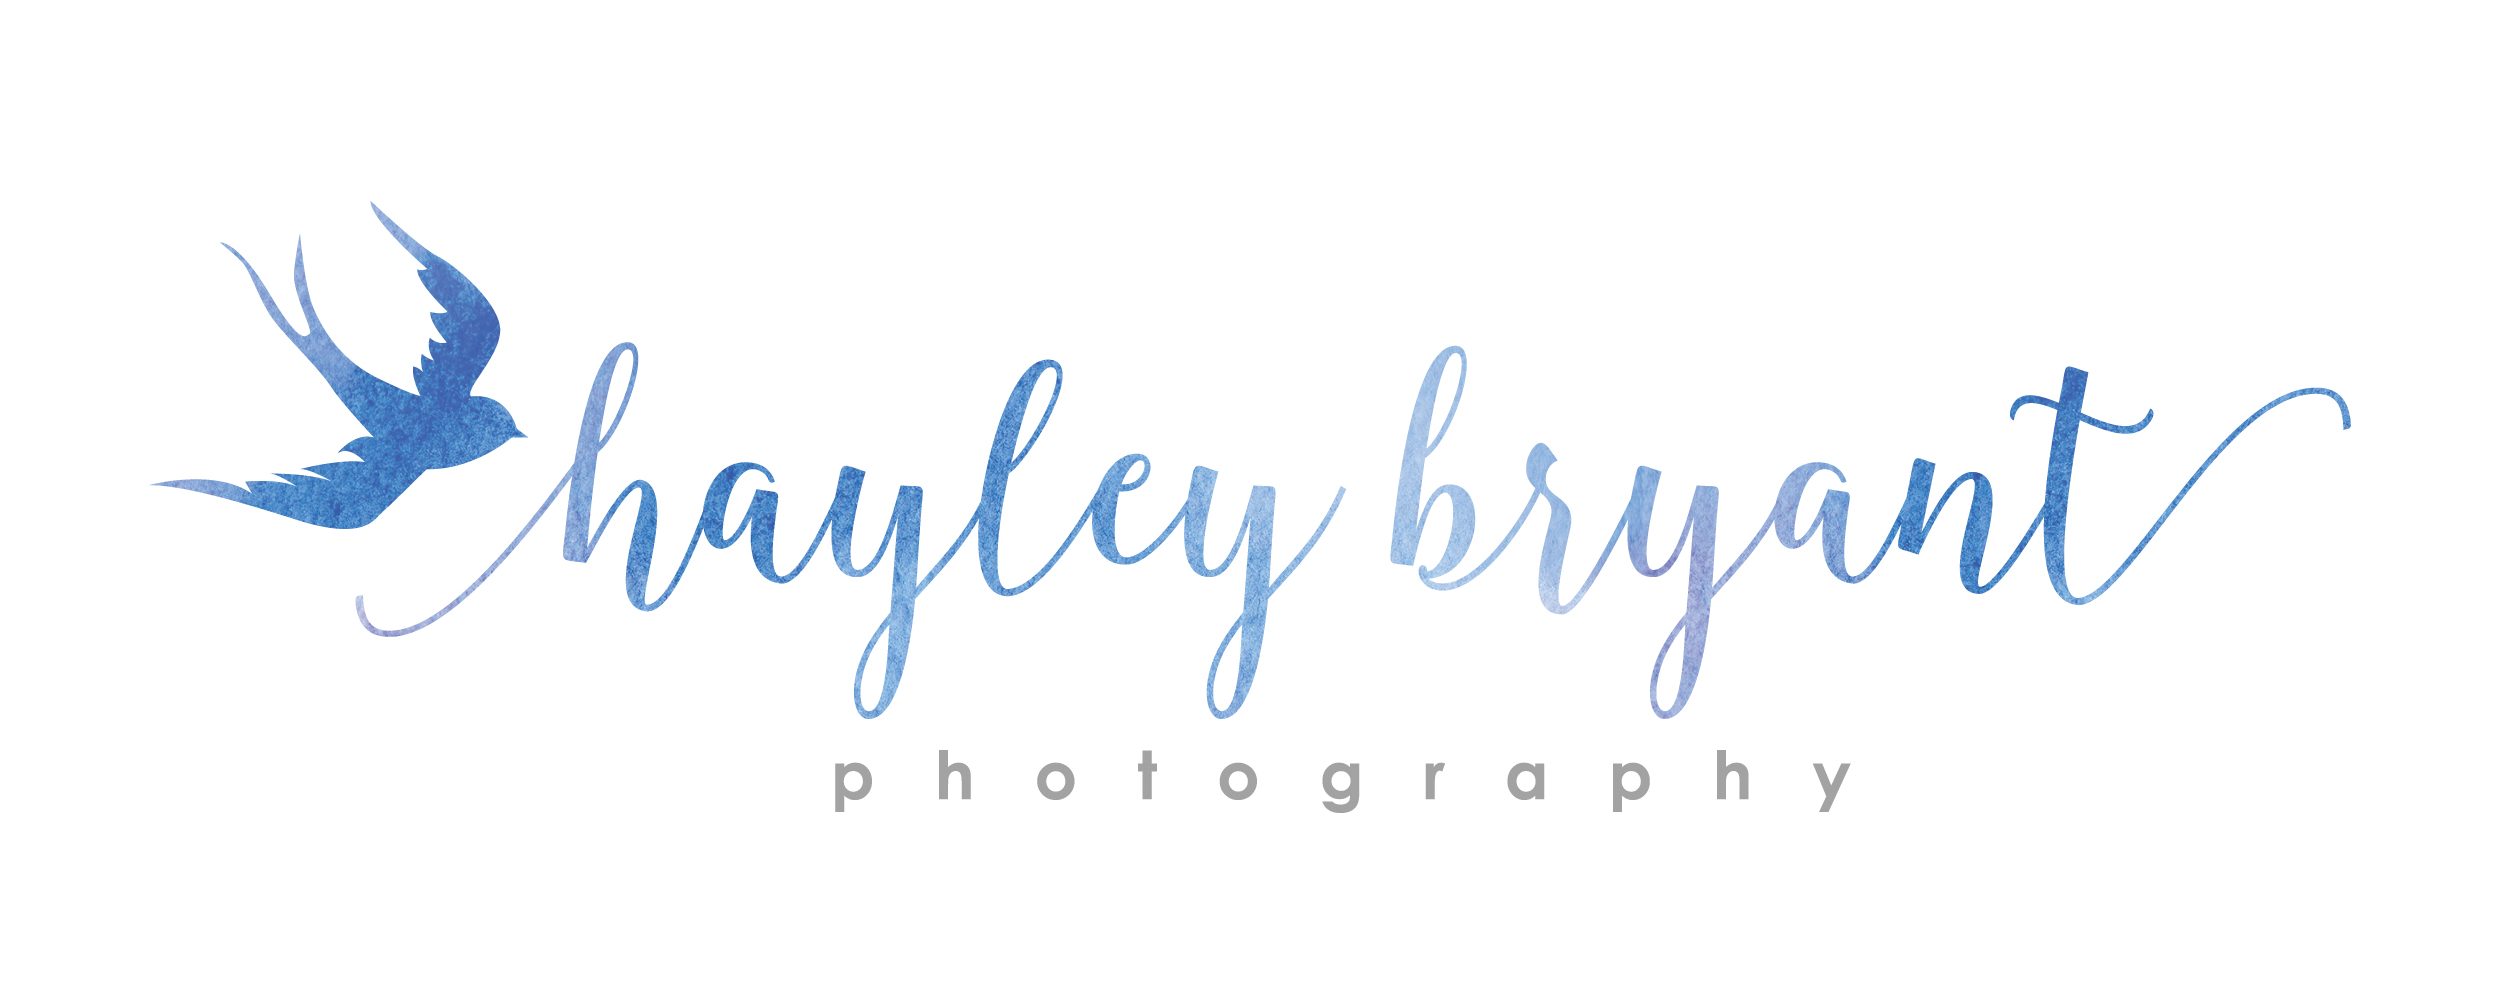 Hayley Bryant Photography